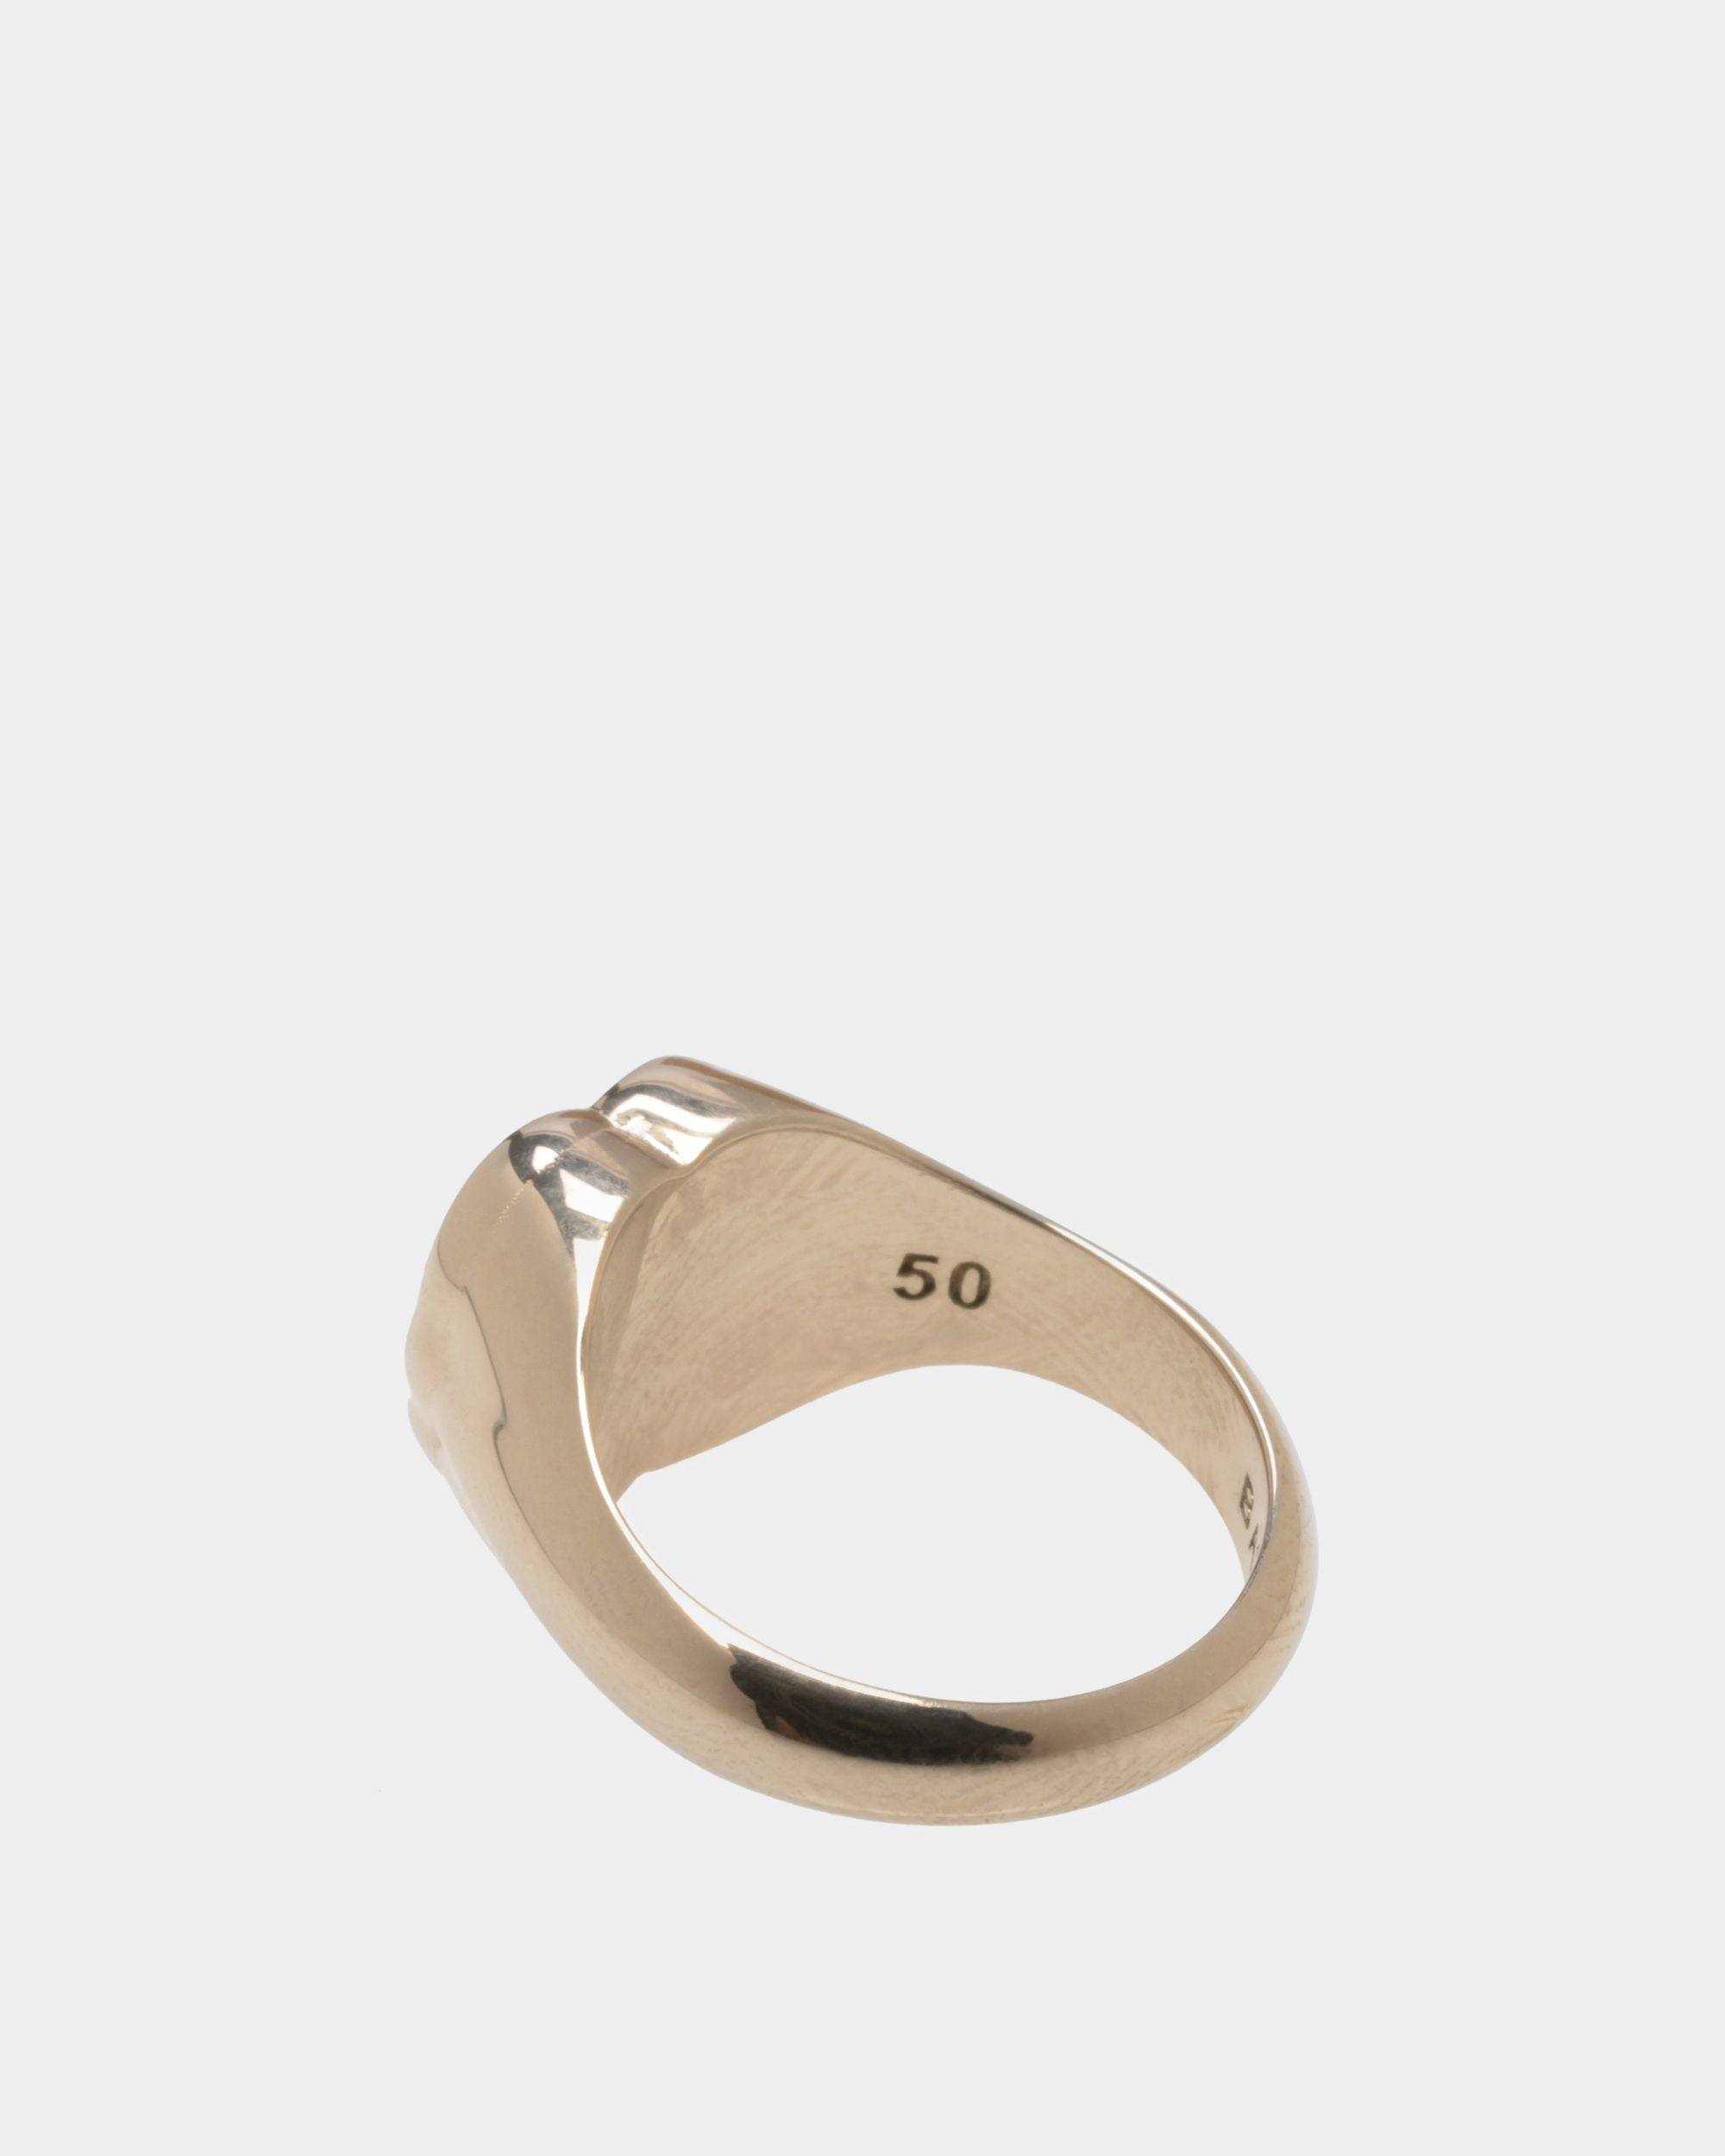 Emblem | Women's Ring in Silver Eco Brass | Bally | Still Life Back